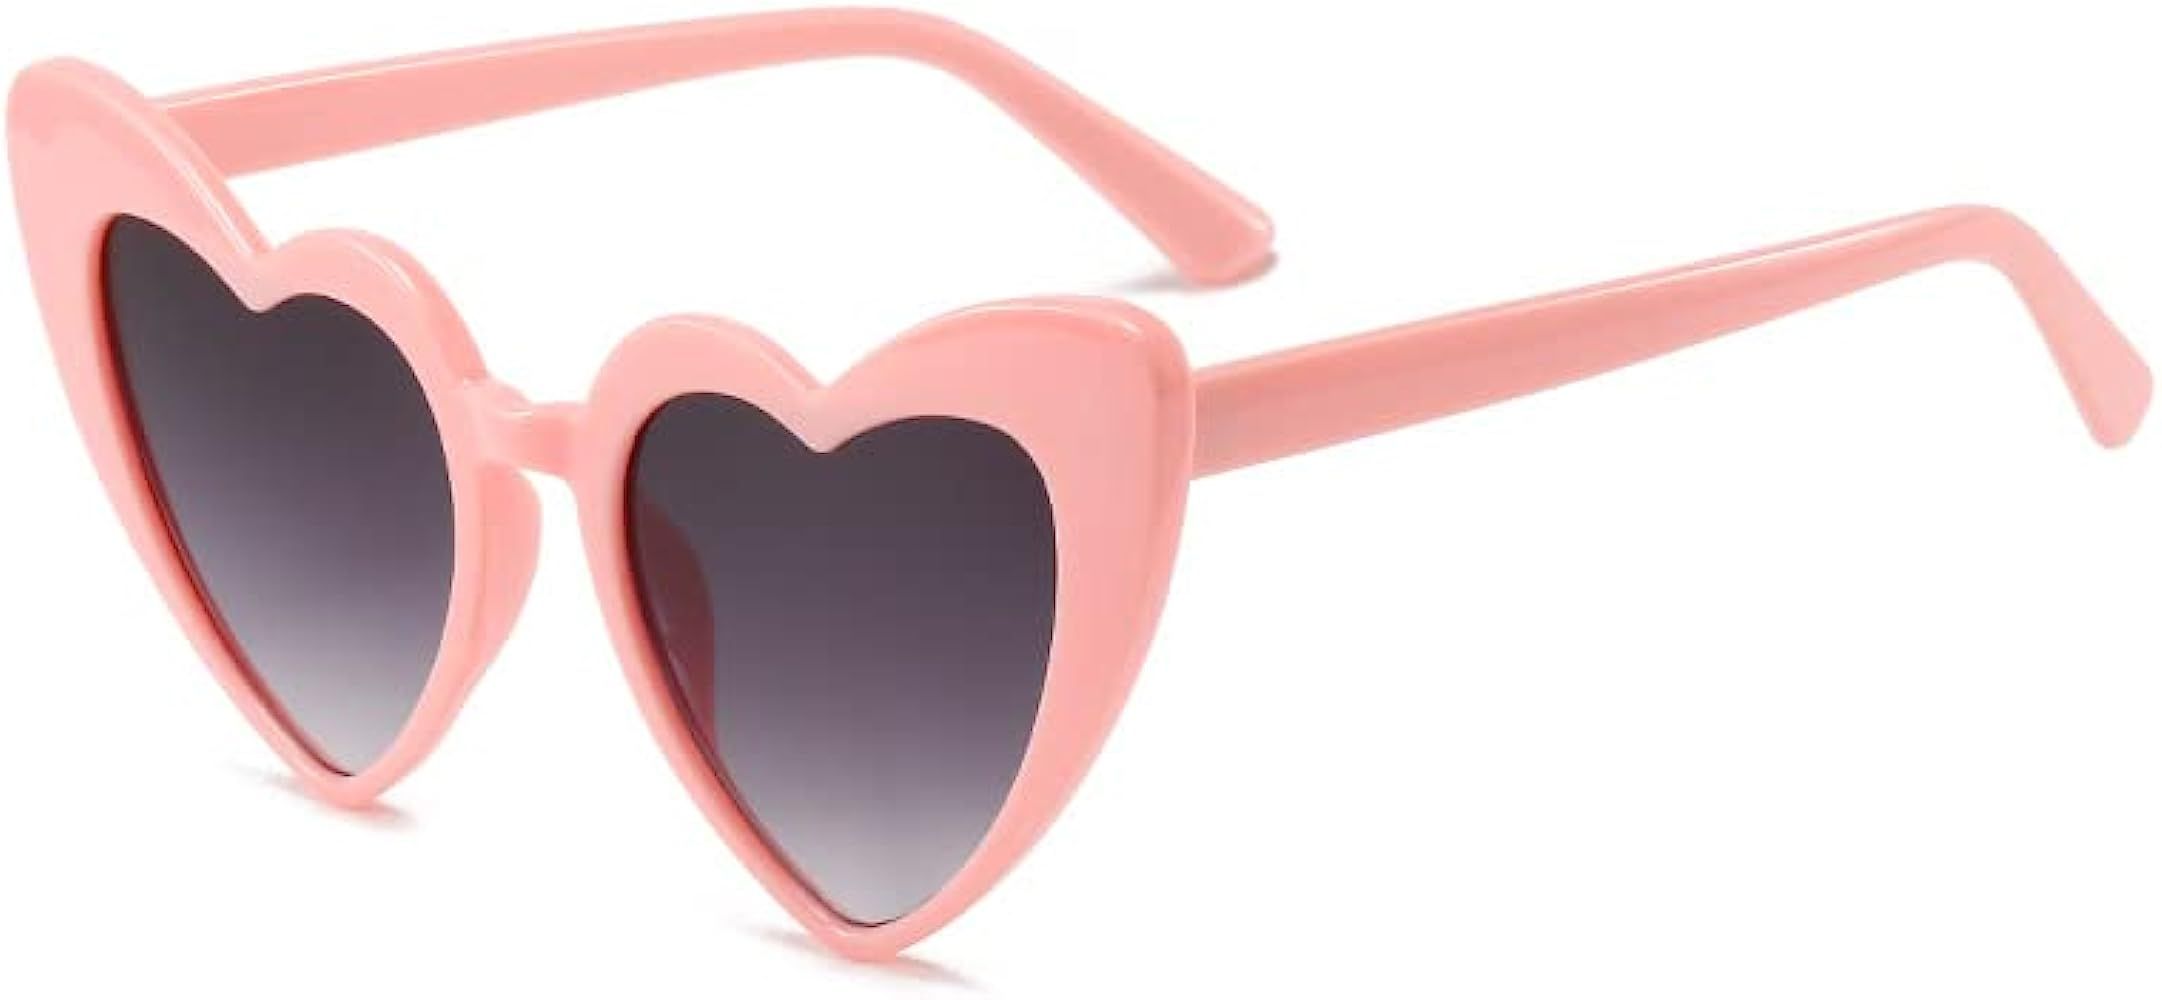 FKEYTO Heart Shaped Sunglasses for Women,Vintage Cat Eye Mod Style Retro Glasses | Amazon (US)